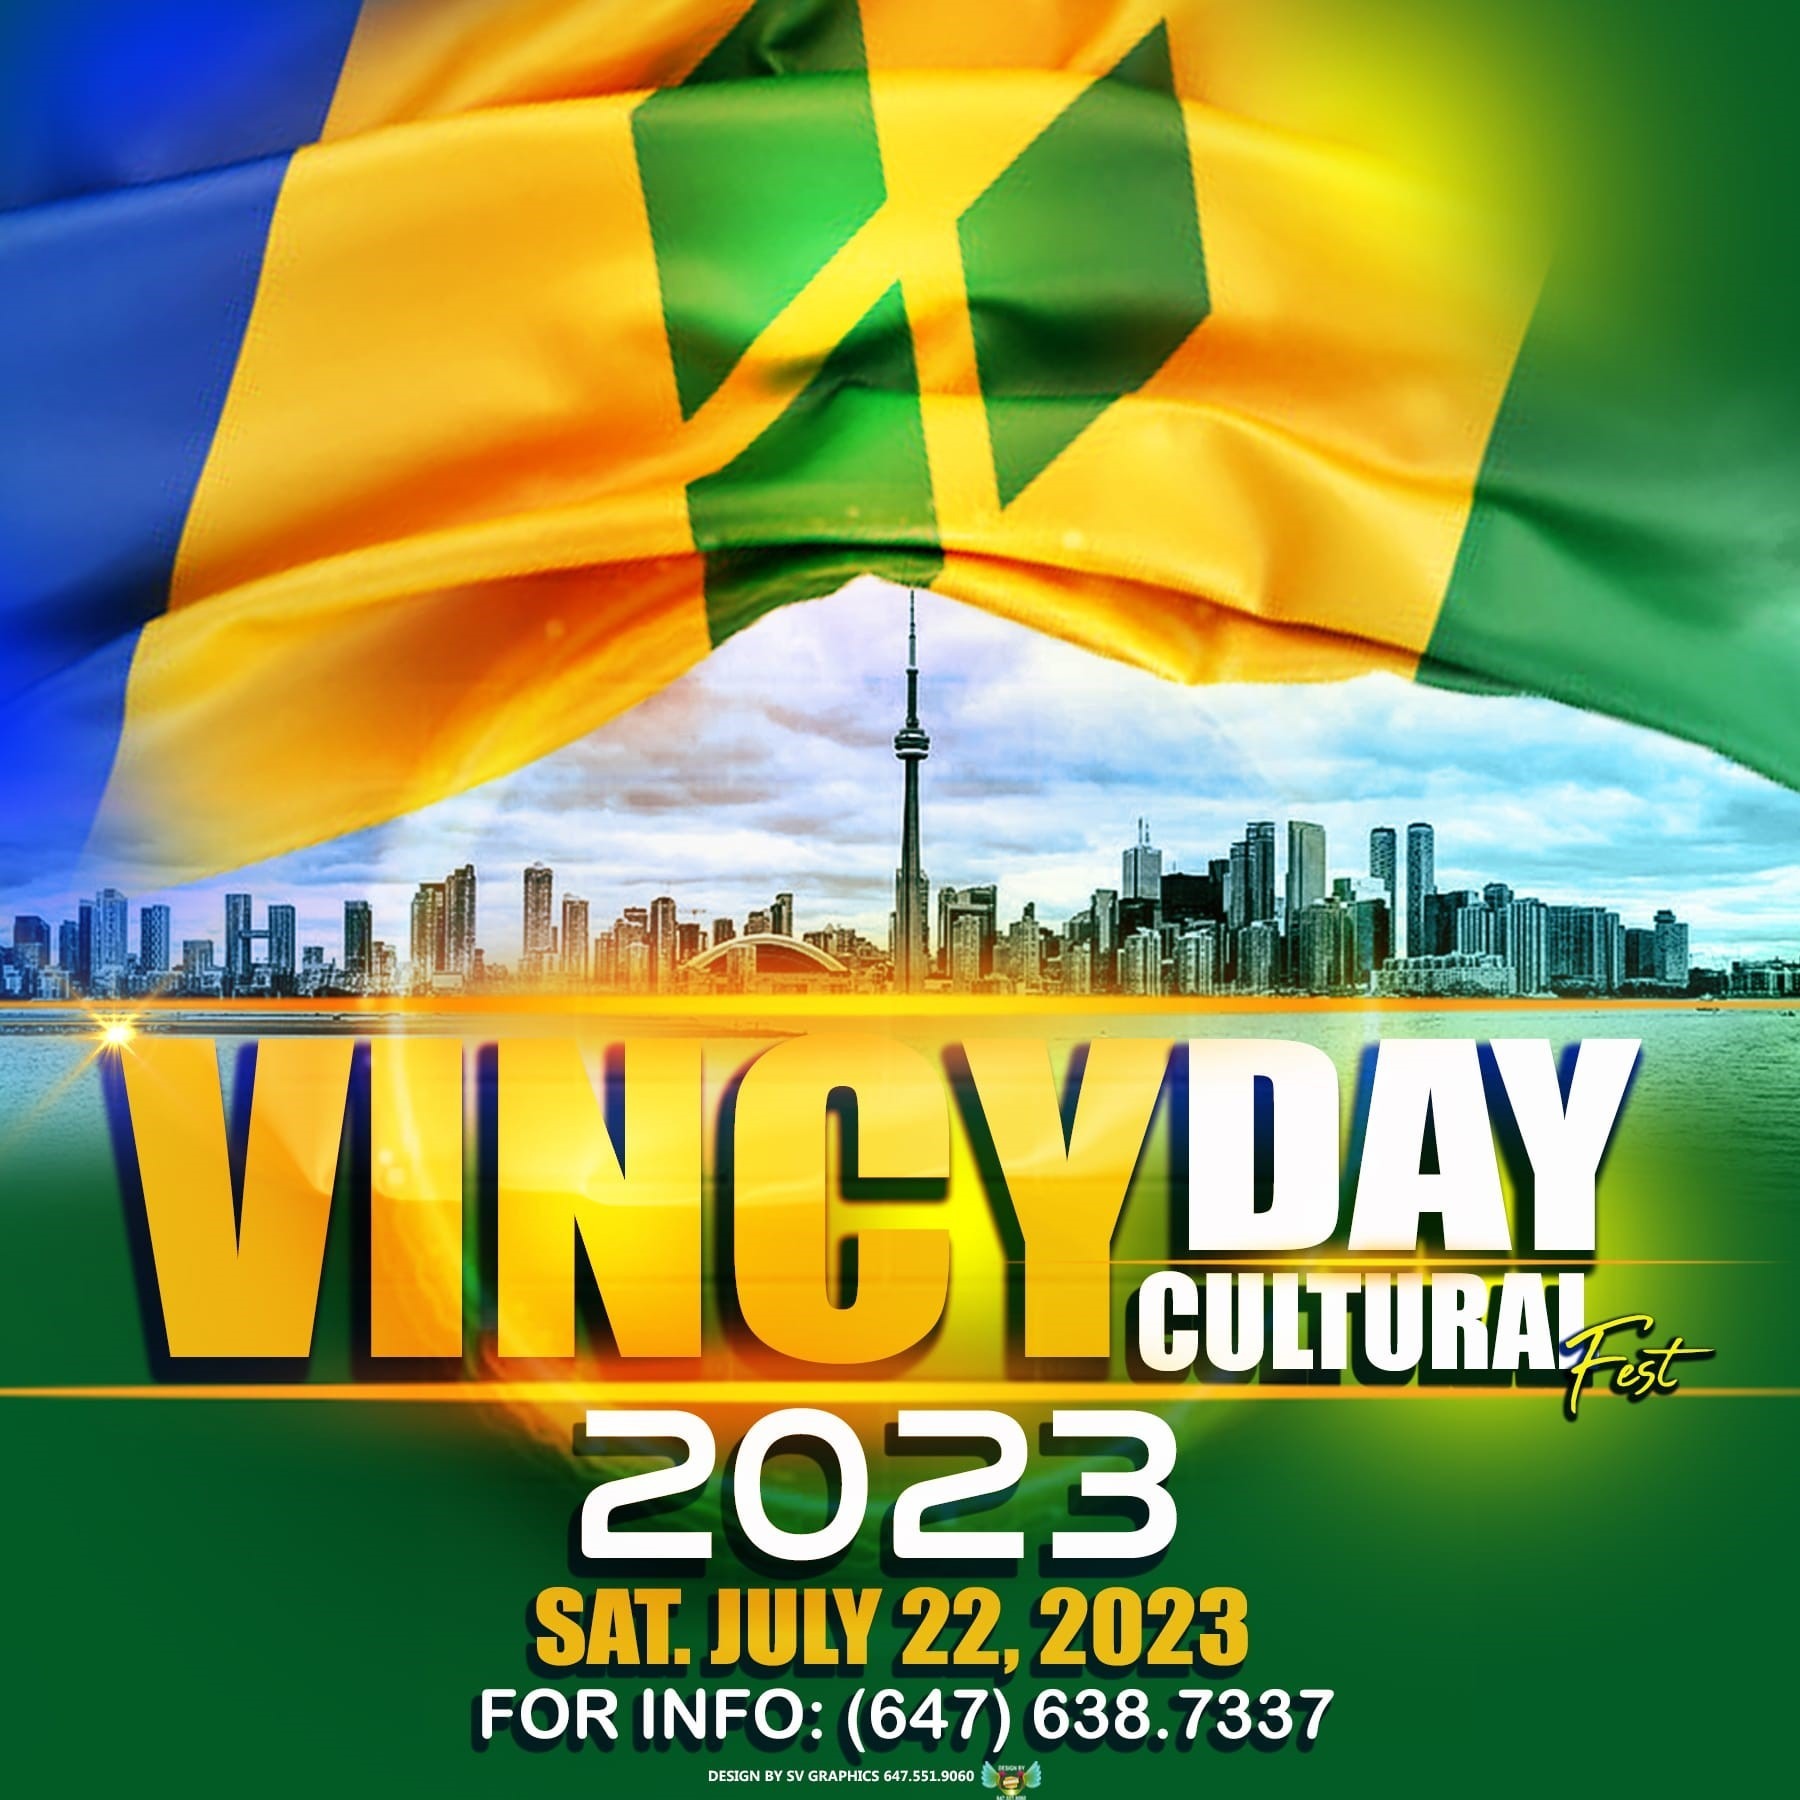 TORONTO VINCY DAY CULTURAL FEST 2023